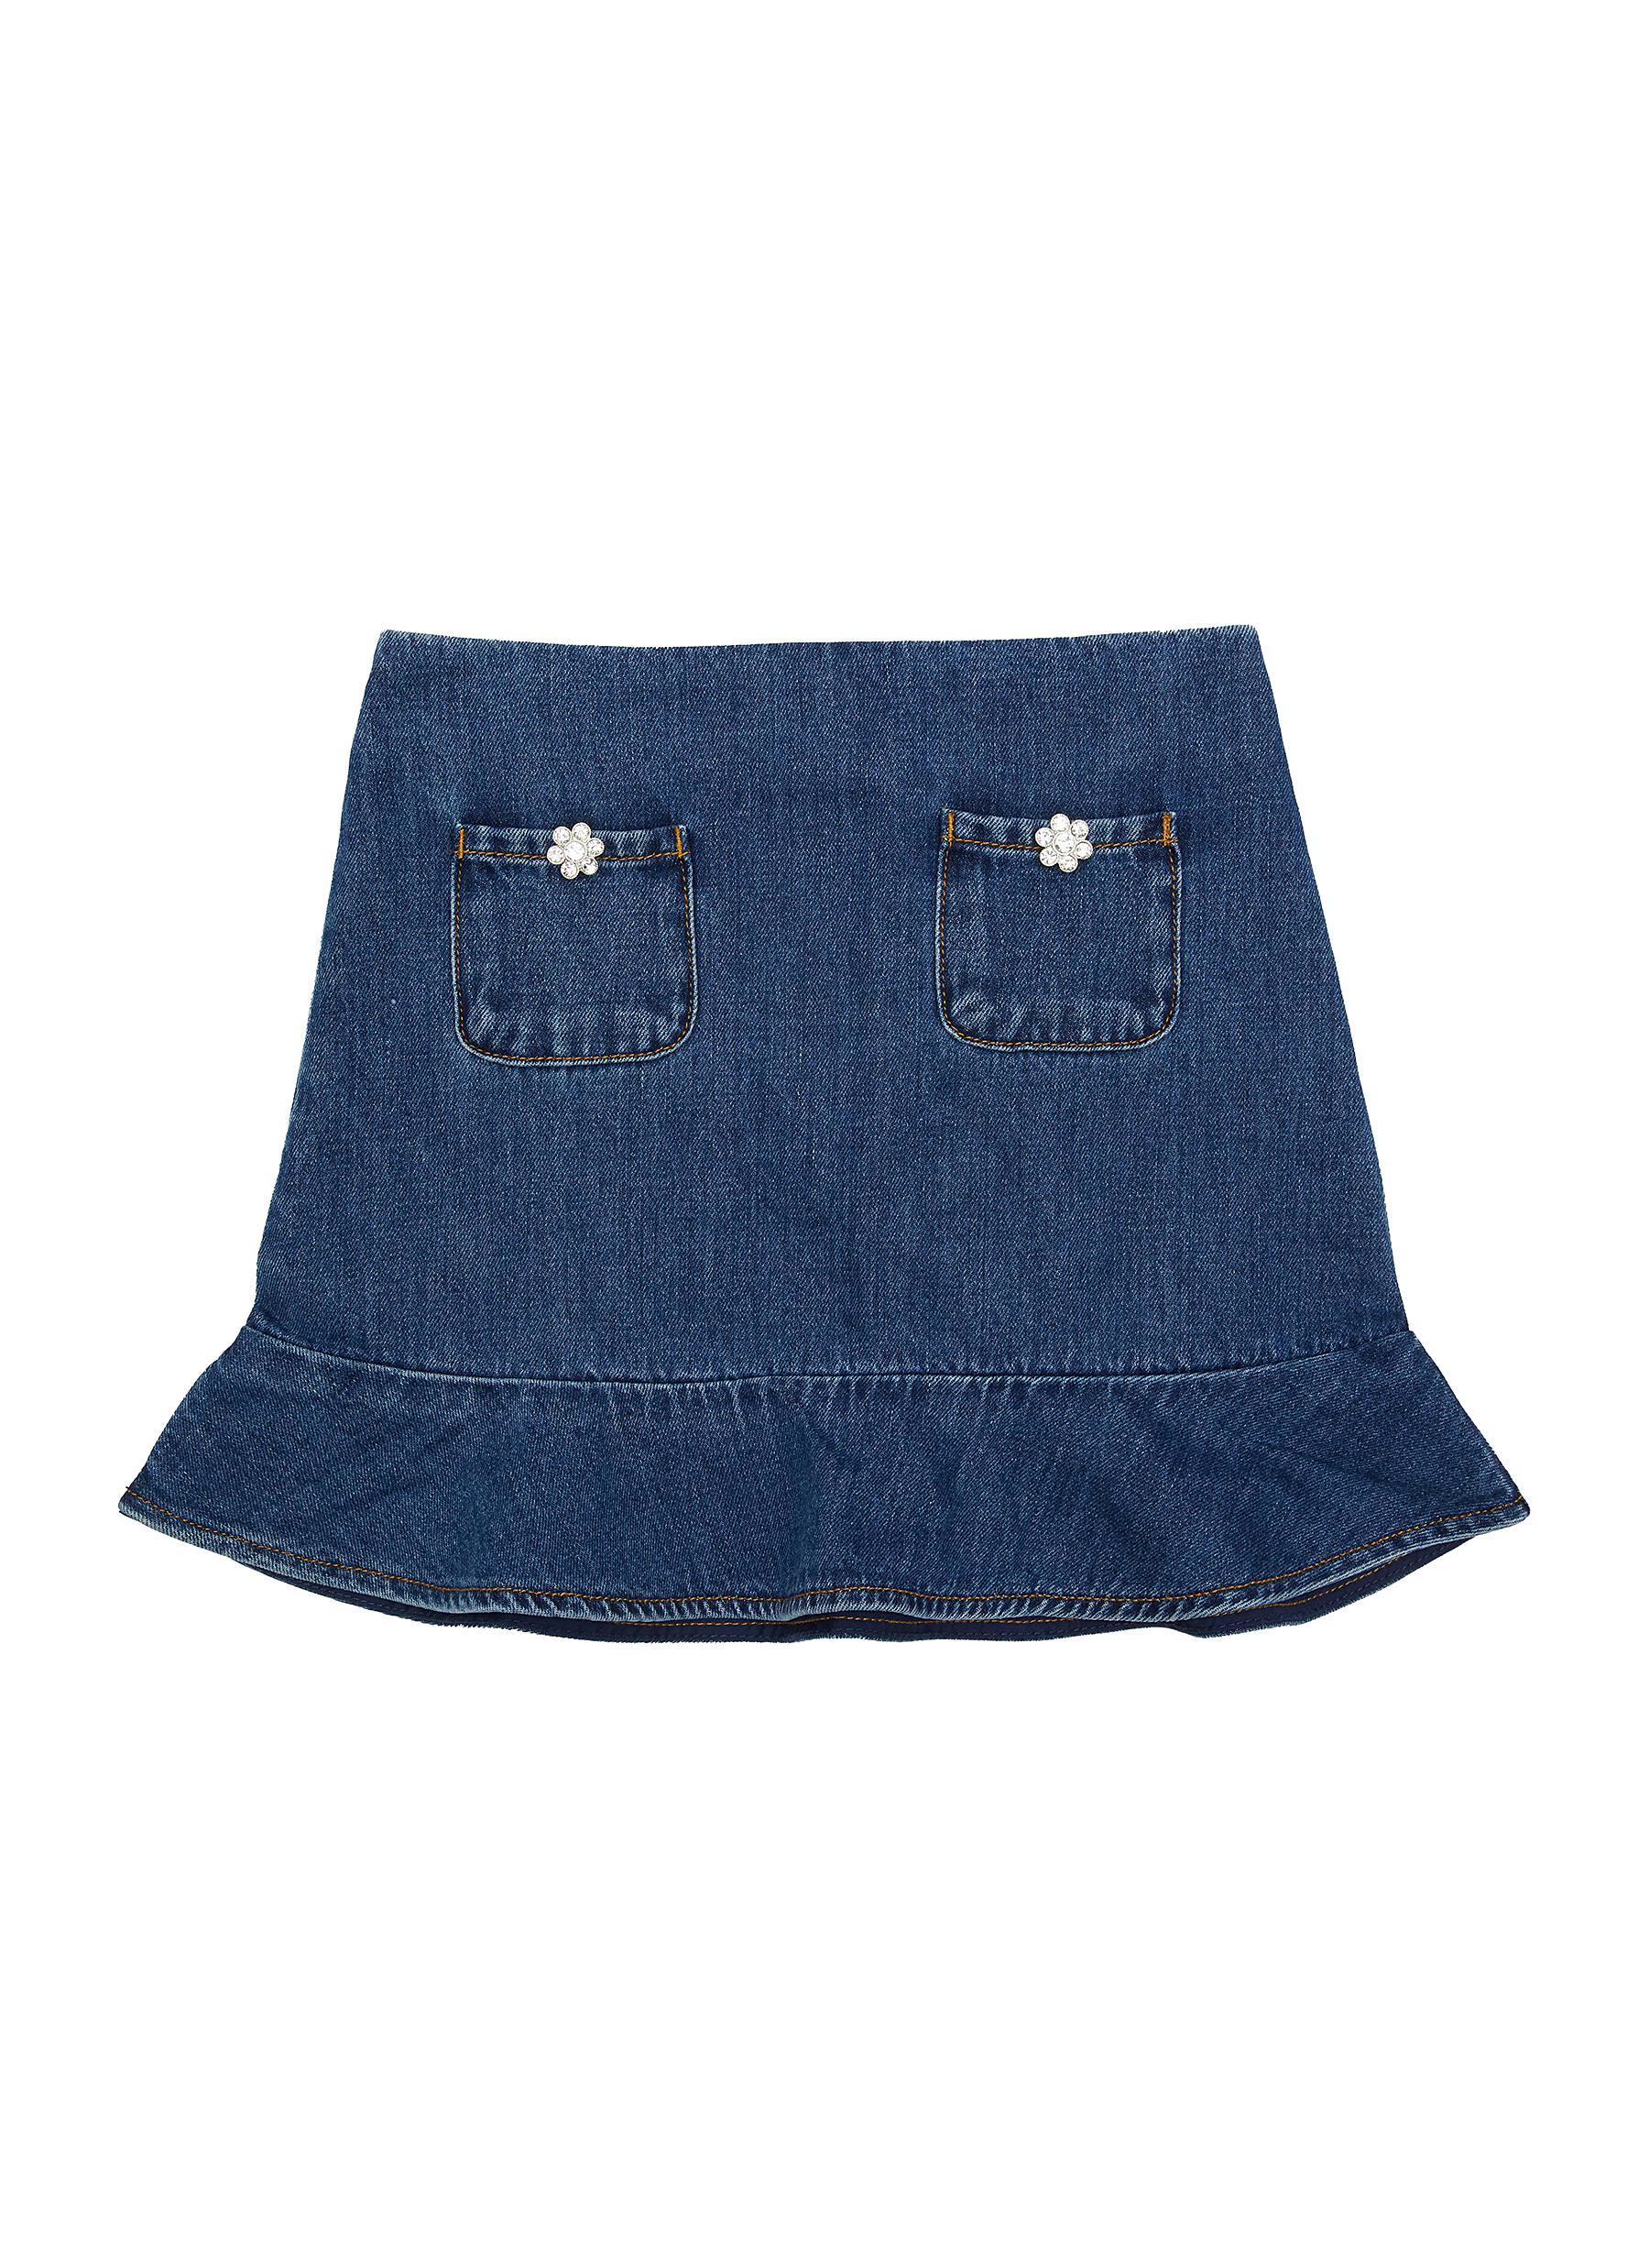 Forever 21 Denim Mini Peplum Skirt Women's 27 Blue Stone Wash Pleated  Cotton | eBay